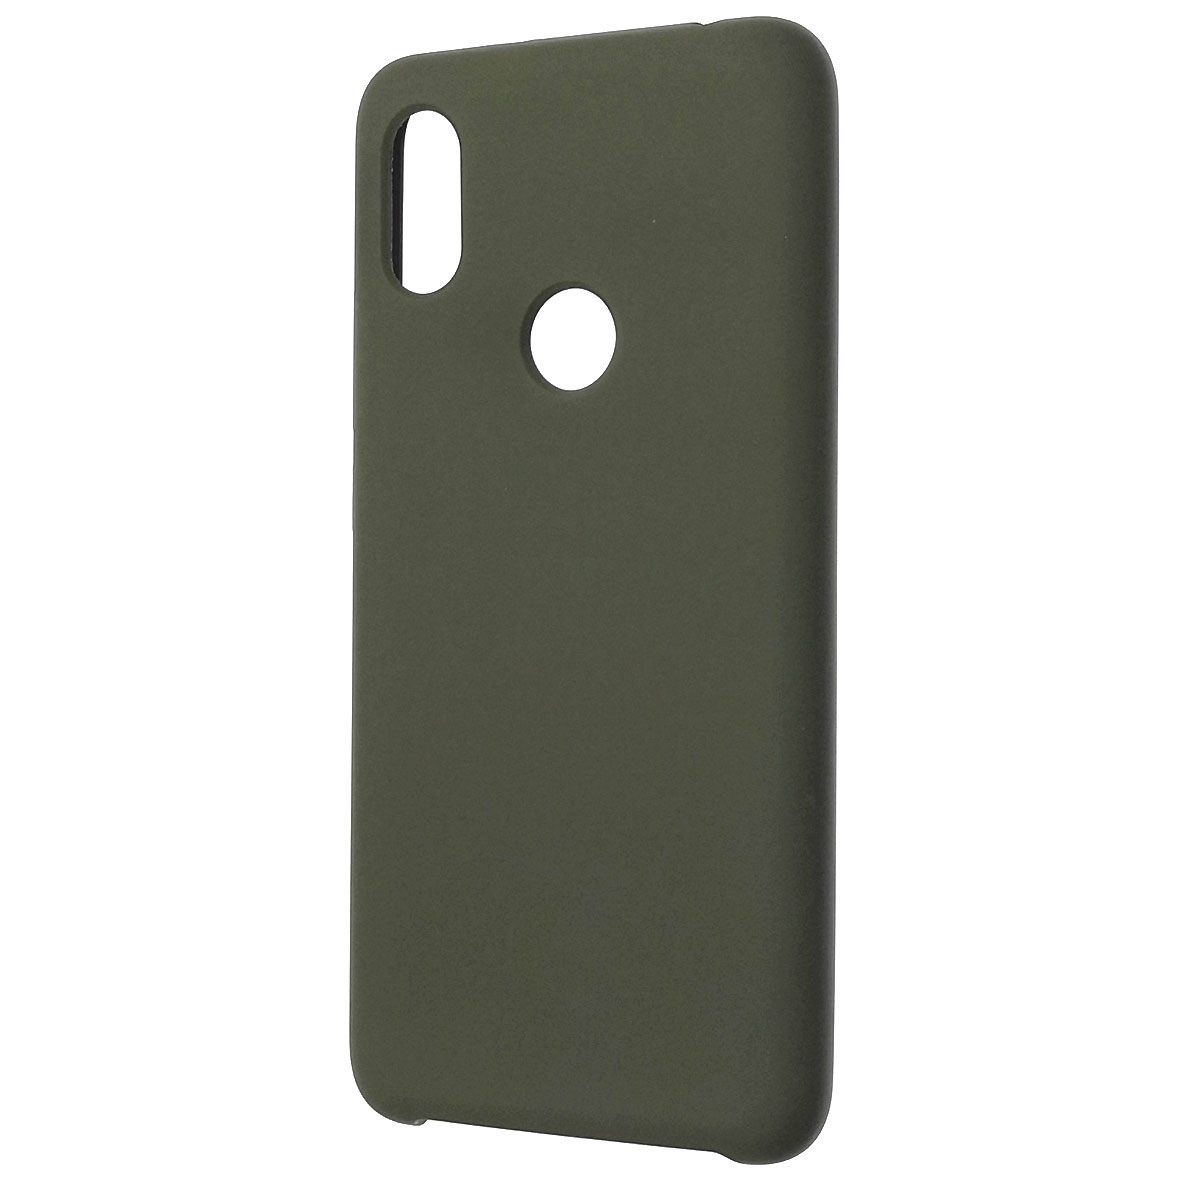 Чехол накладка Silicon Cover для XIAOMI Redmi S2, силикон, бархат, цвет темно серый.